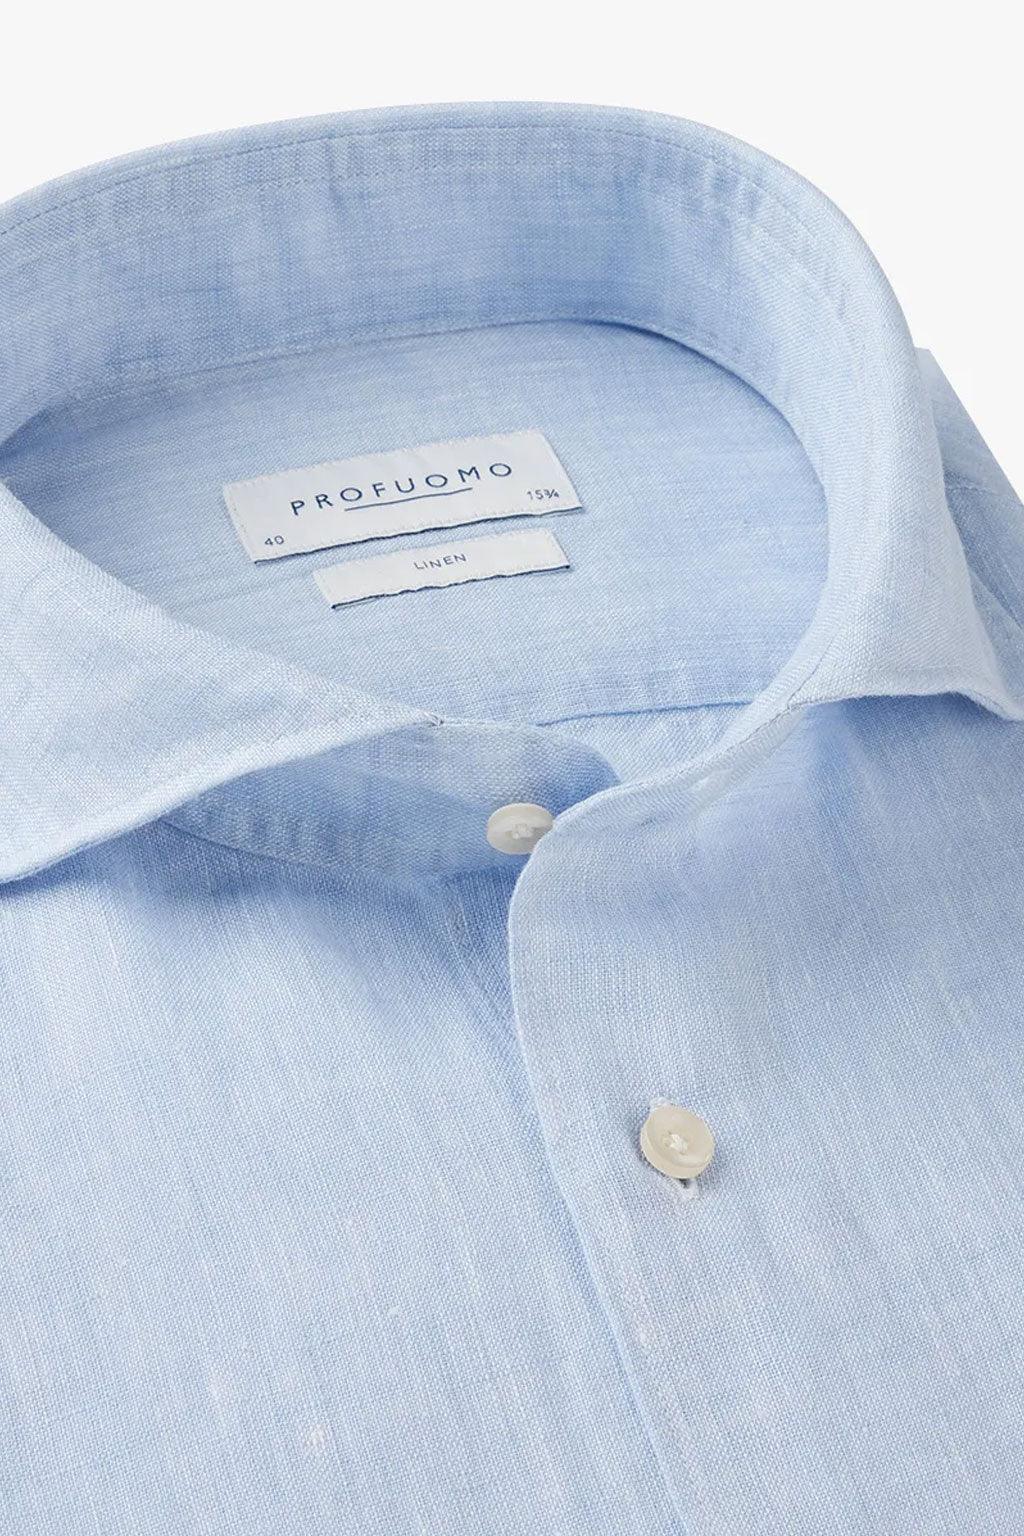 Profuomo overhemd lange mouw - Big Boss | the menswear concept